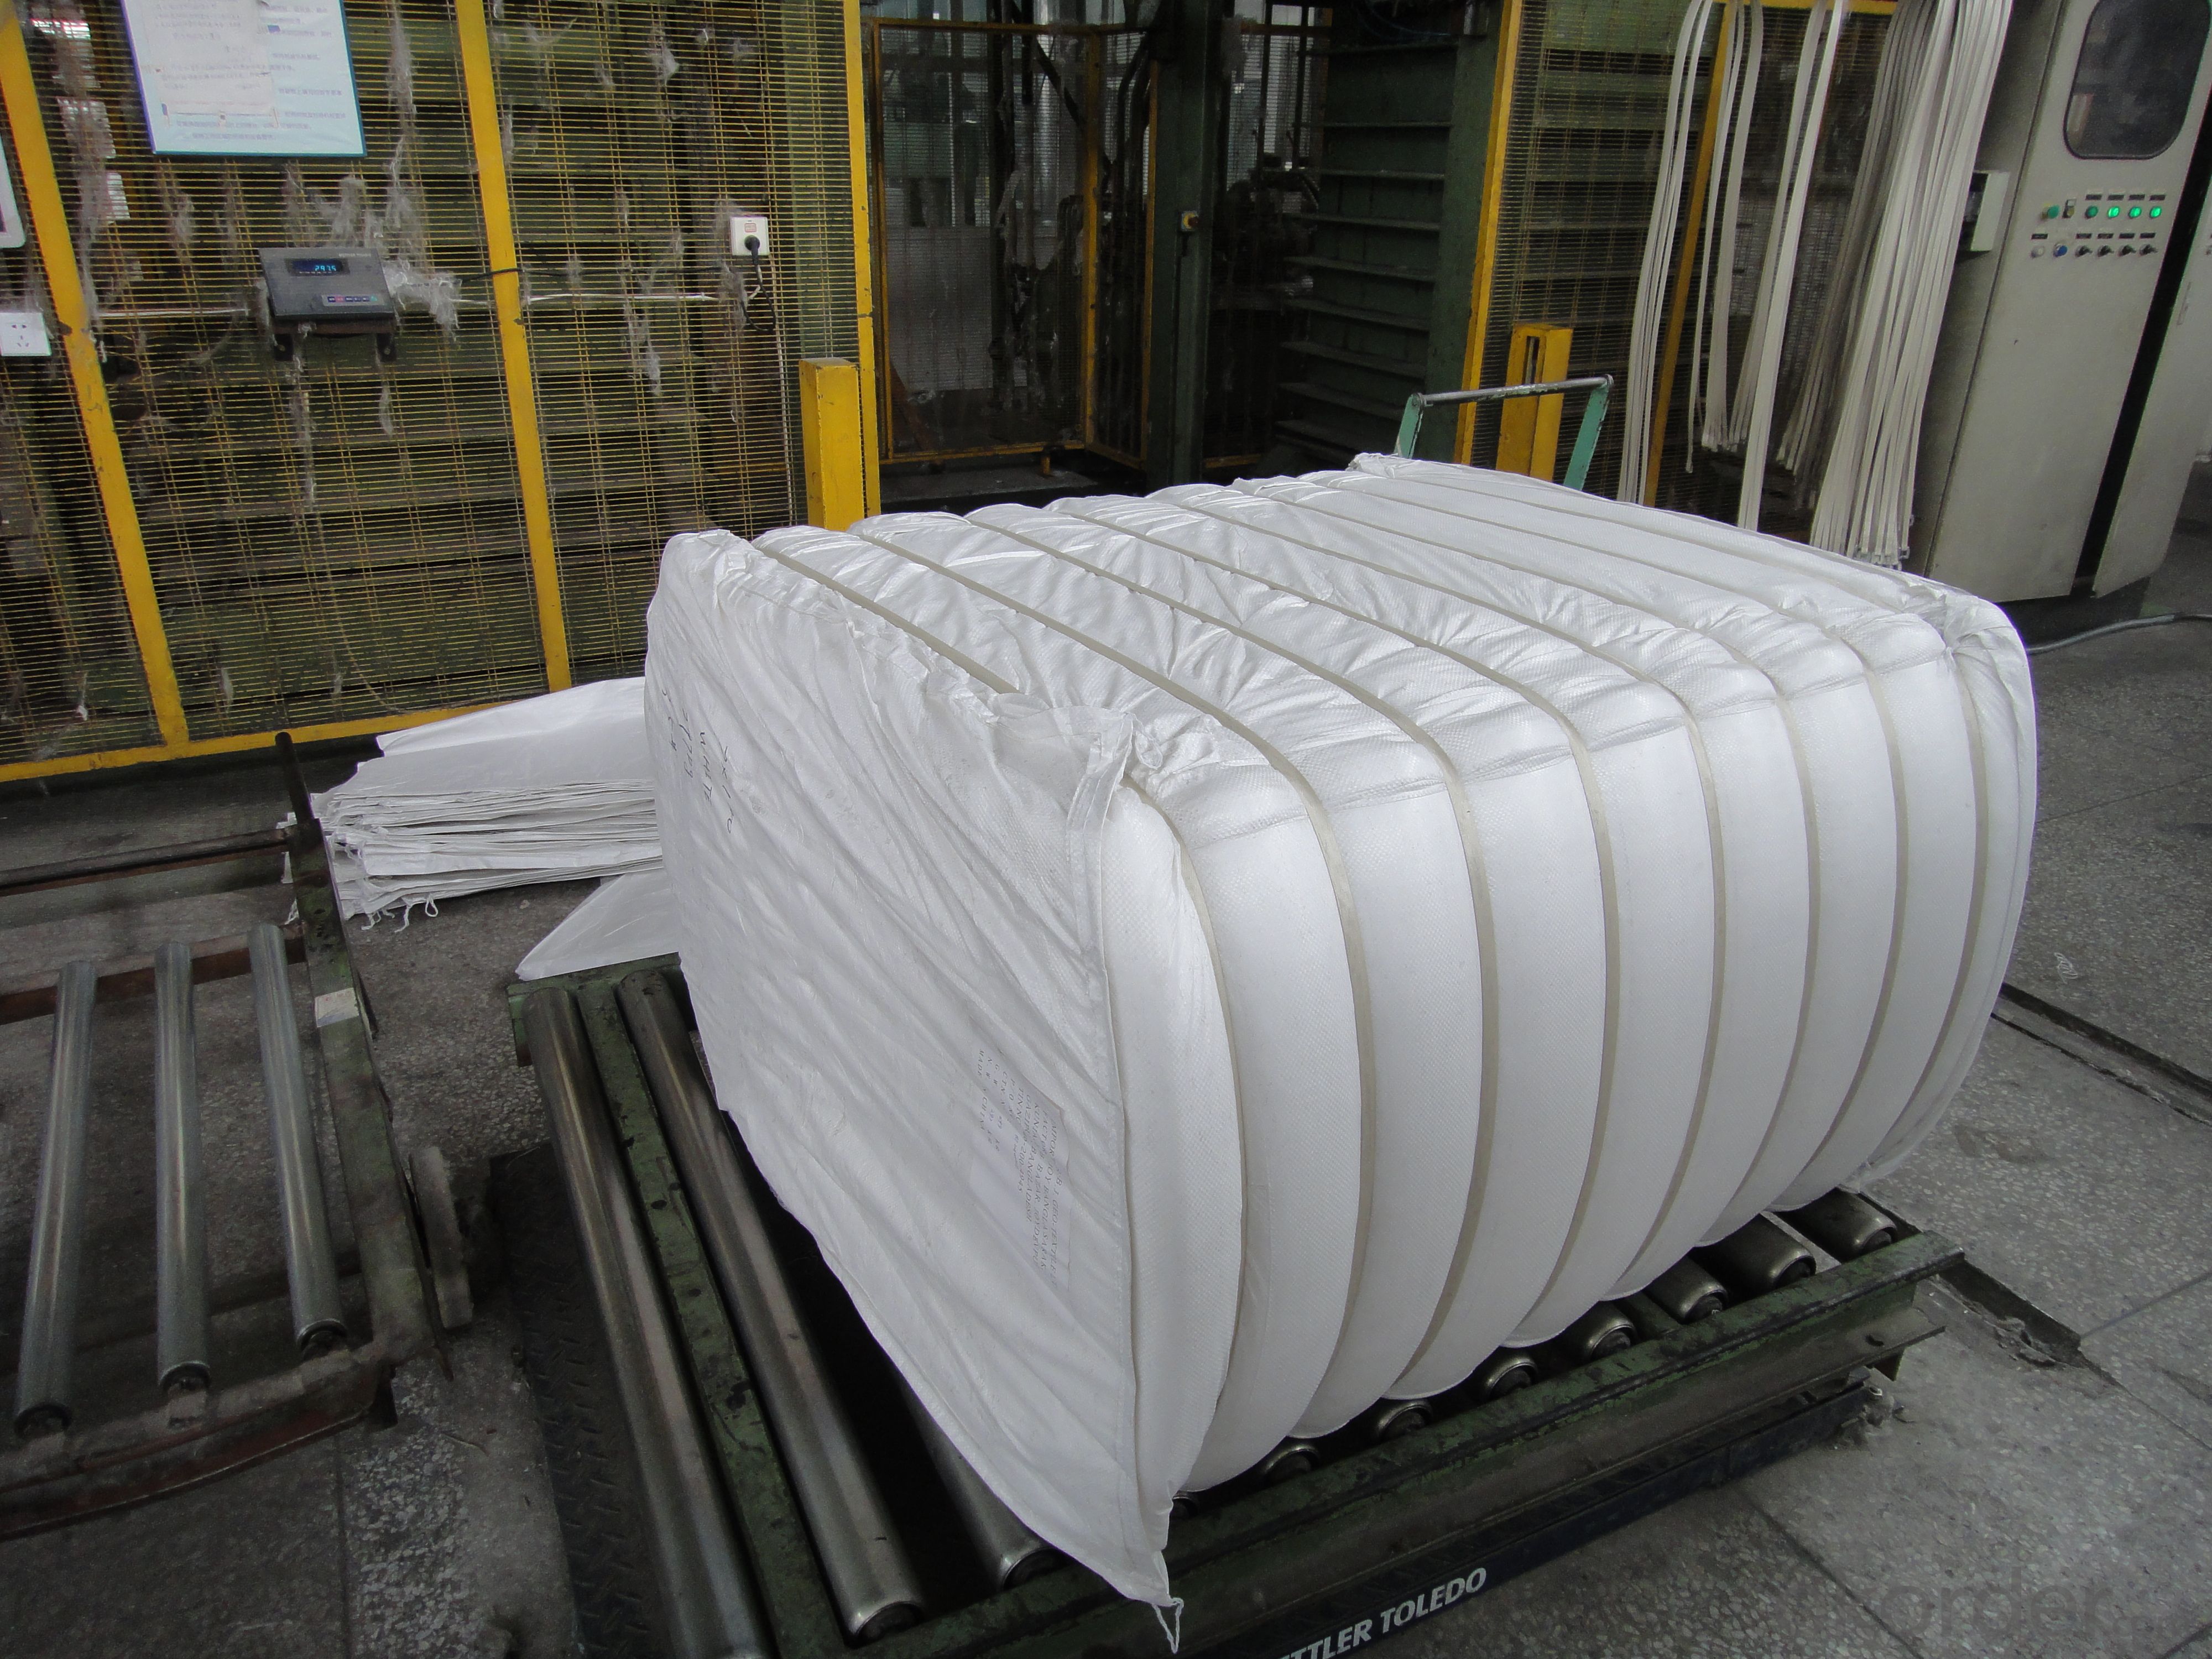 PP Staple fiber for Fabric and Automotive Interior